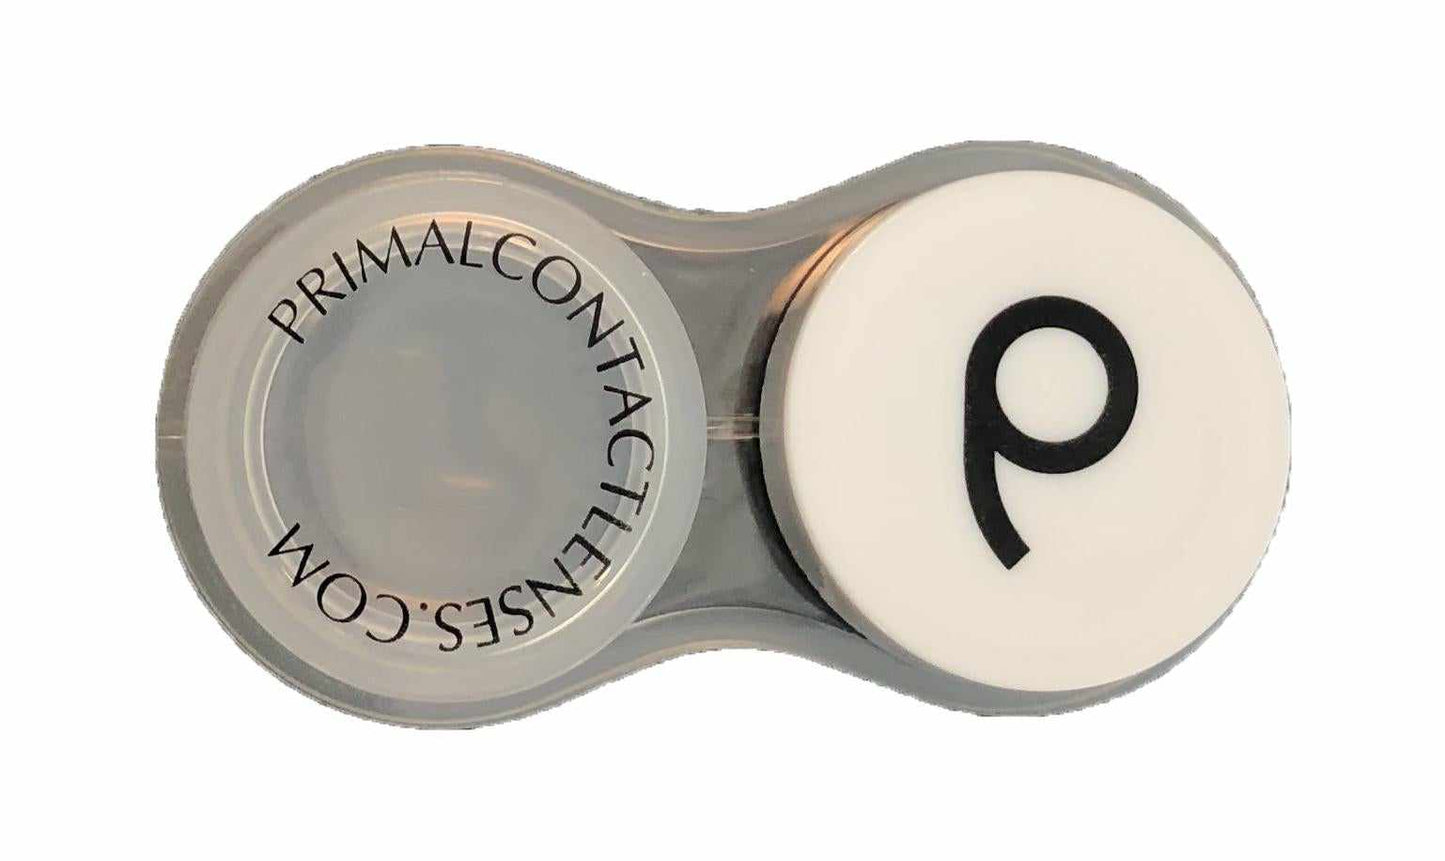 PRIMAL® Contact Lens Case